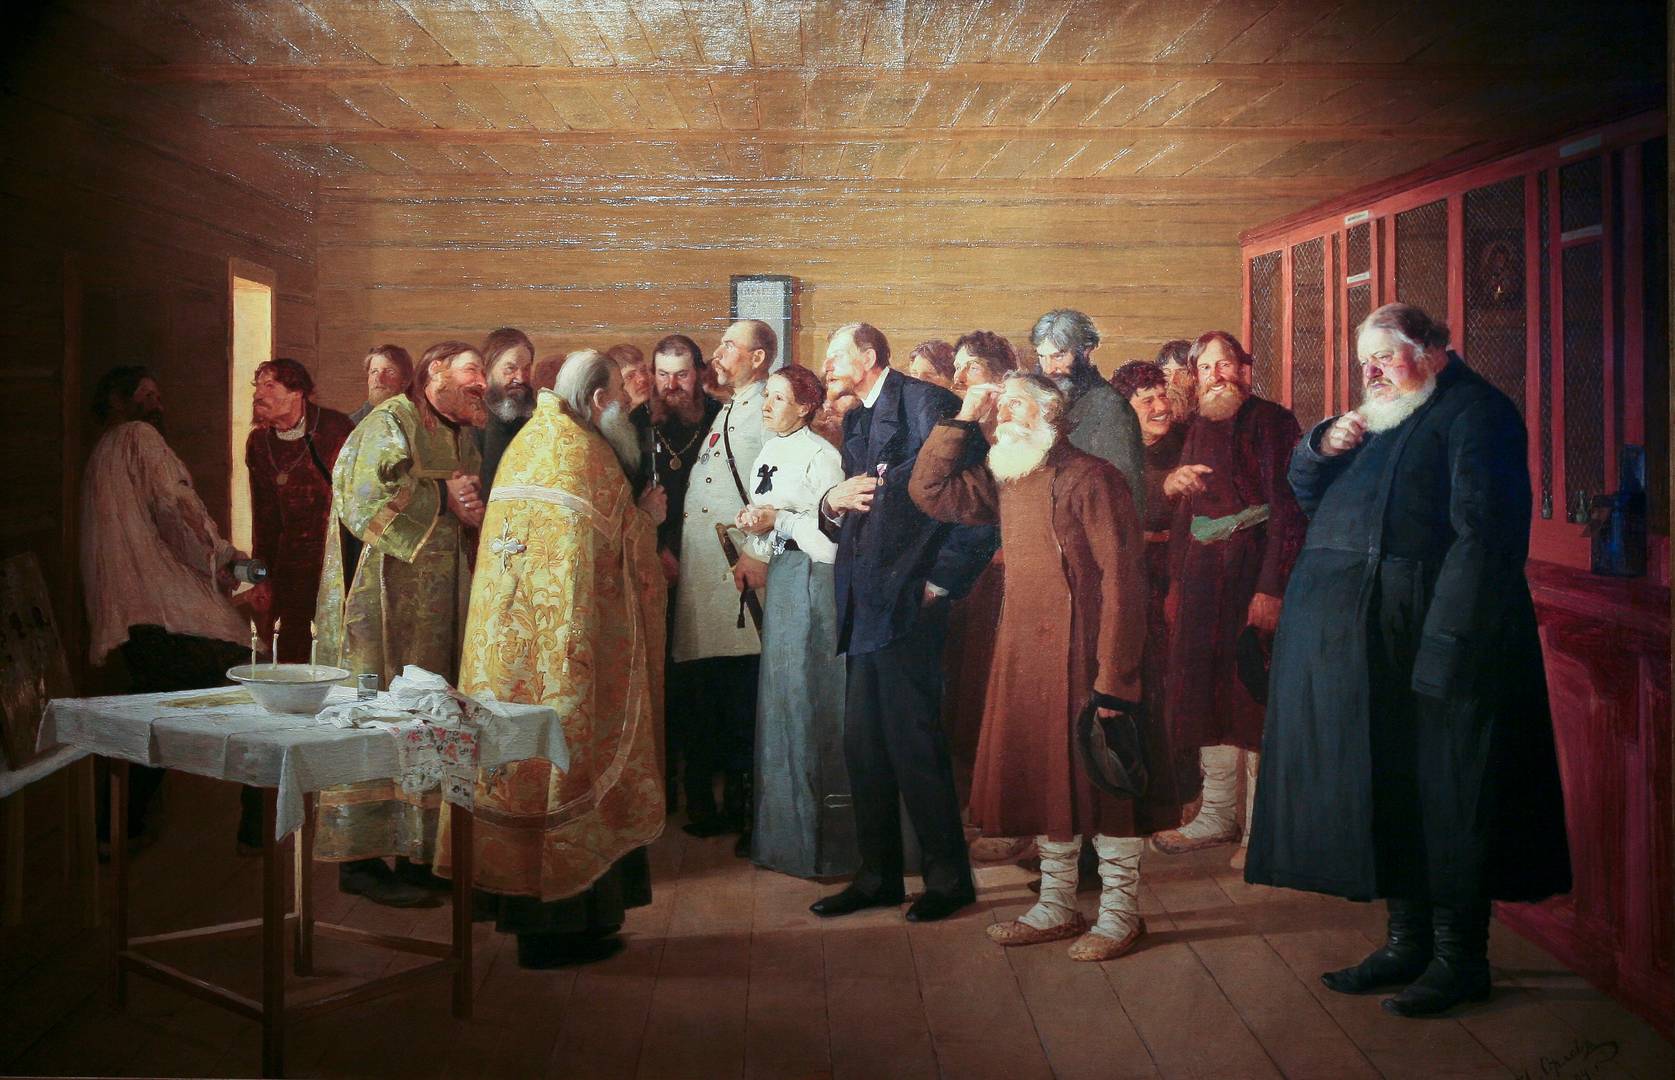 Николай Орлов. Освящение монополии (Молебен в казёнке). 1894